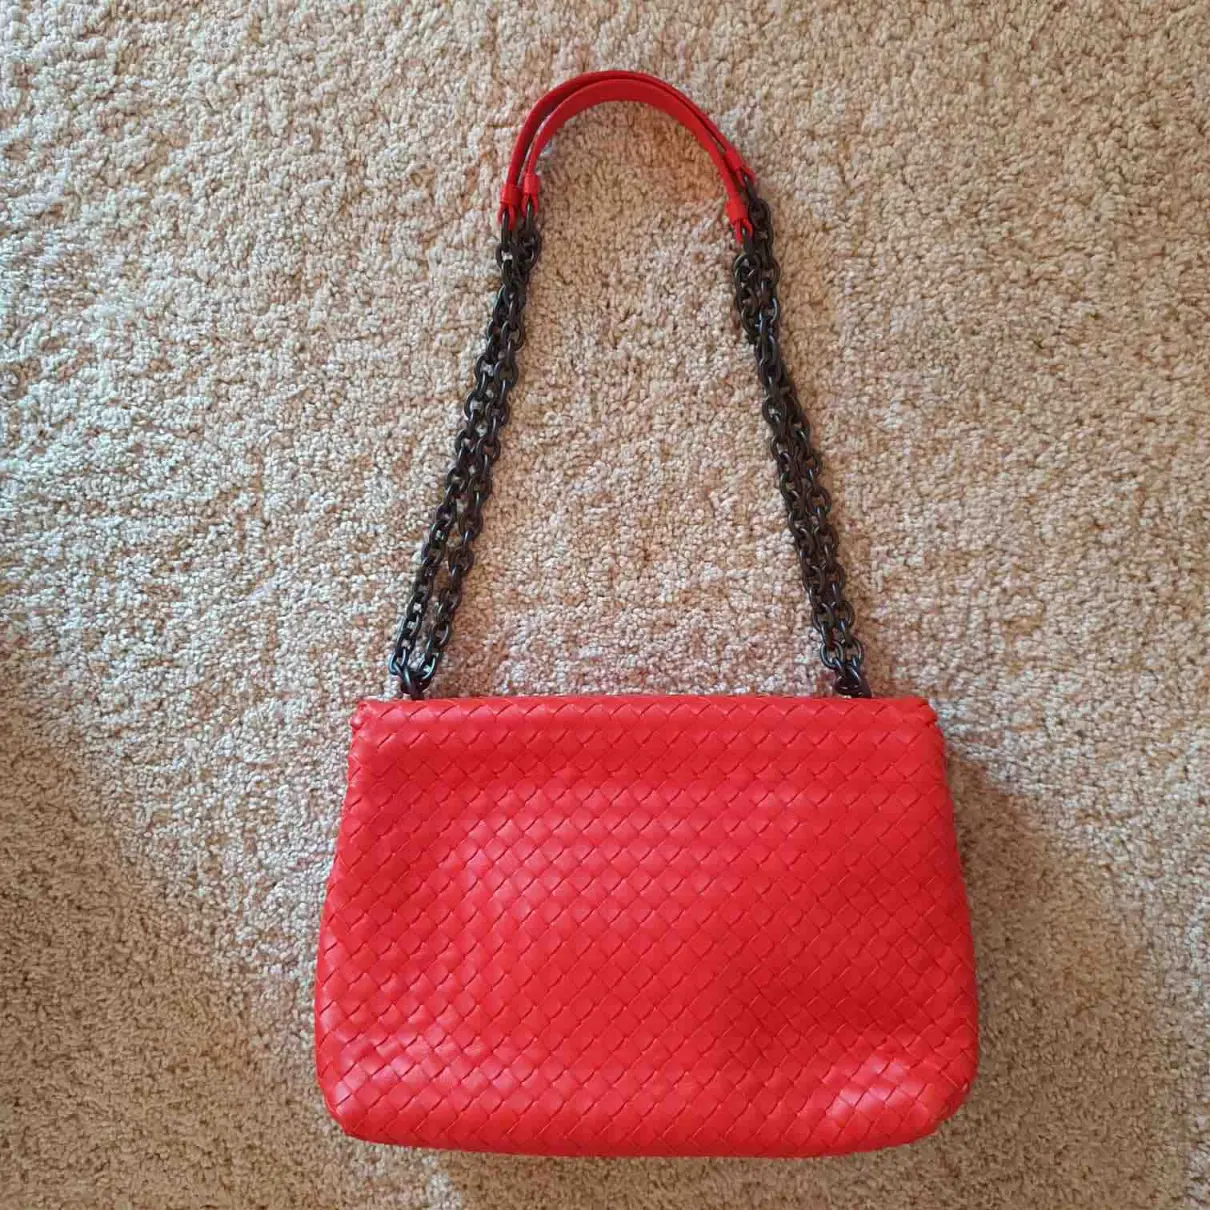 Buy Bottega Veneta Olimpia leather handbag online